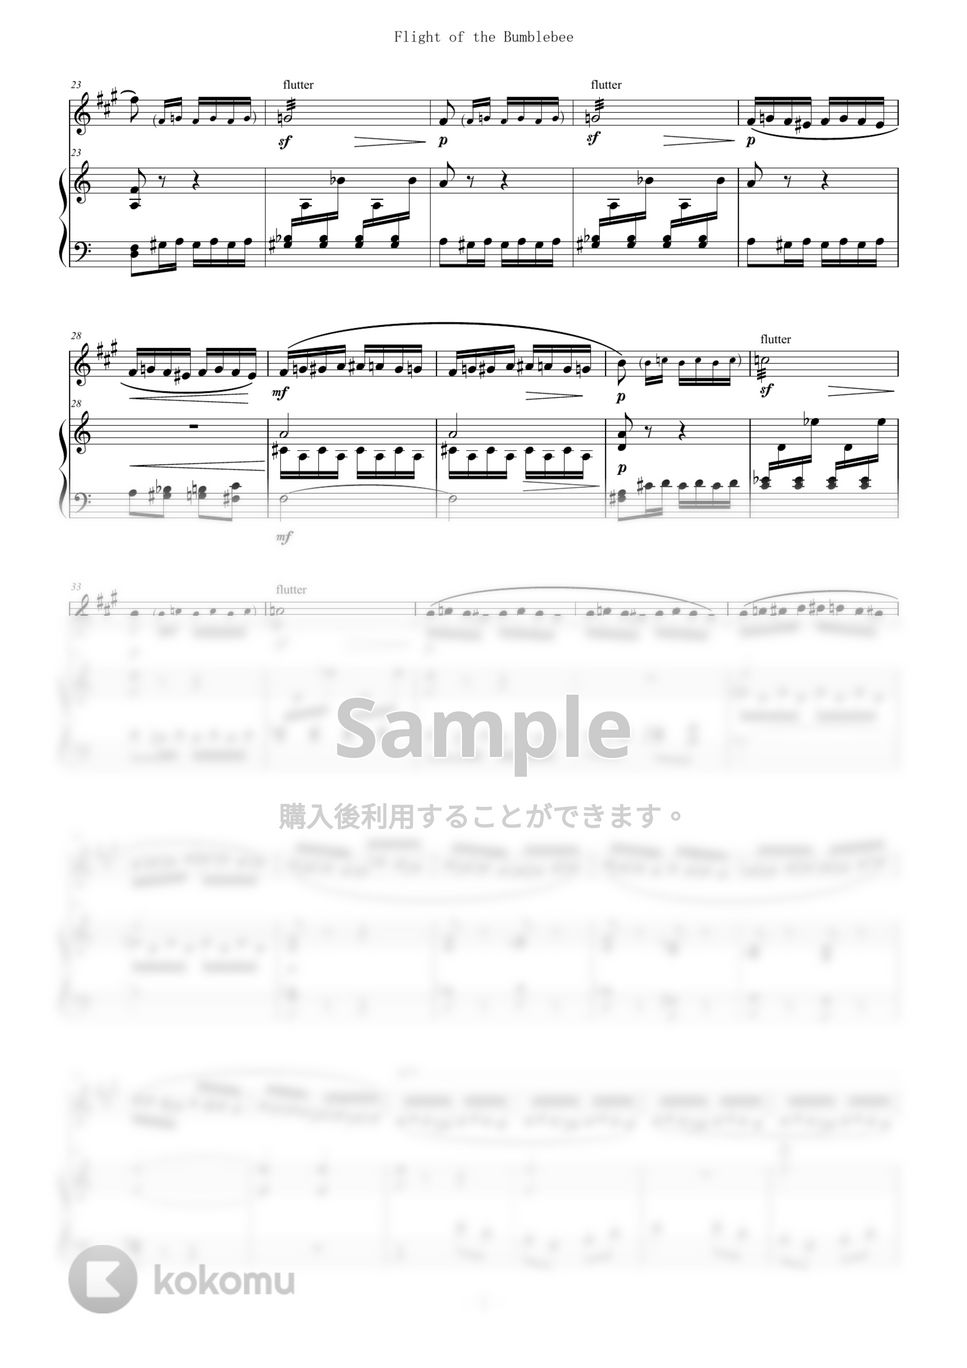 Rimsky-Korsakov - 熊蜂の飛行 for Baritone Sax and Piano (Flight of the Bumblebee) (Piano/BaritoneSax/バリトンサックス/ピアノ/バリサク) by Zoe